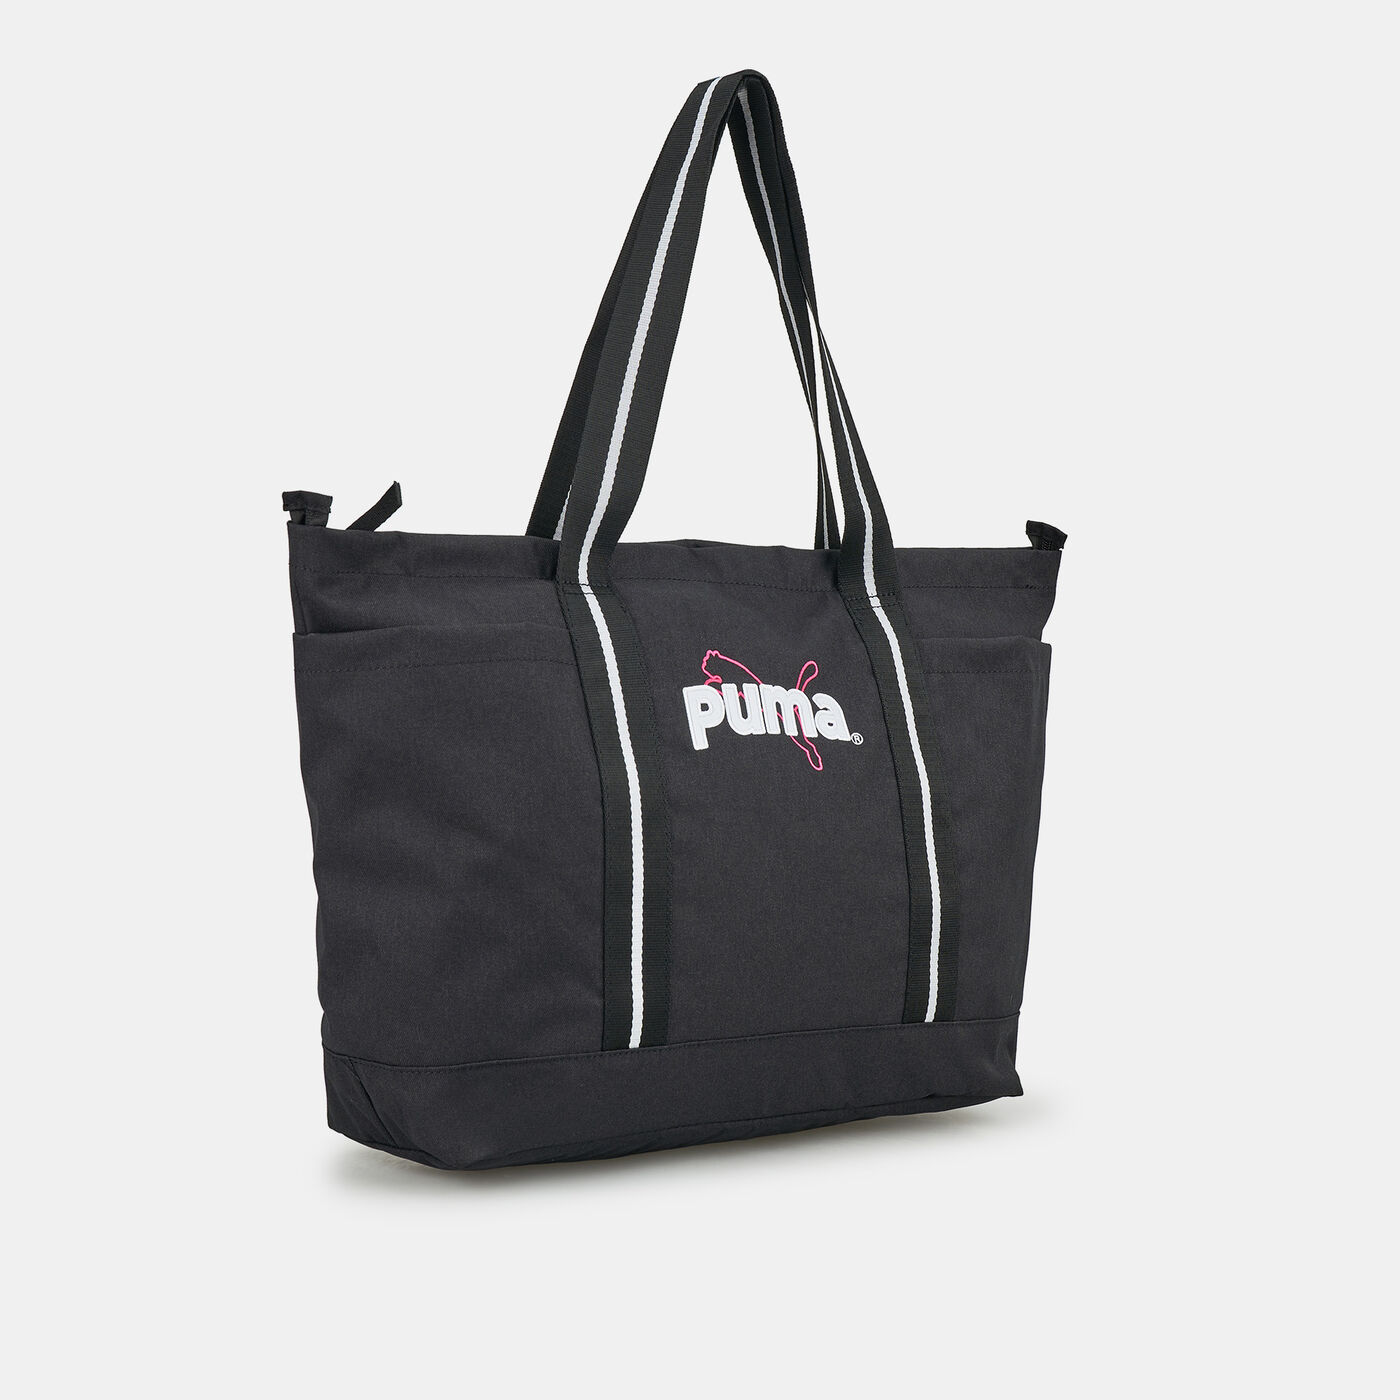 Women's Prime Street Large Shopper Bag